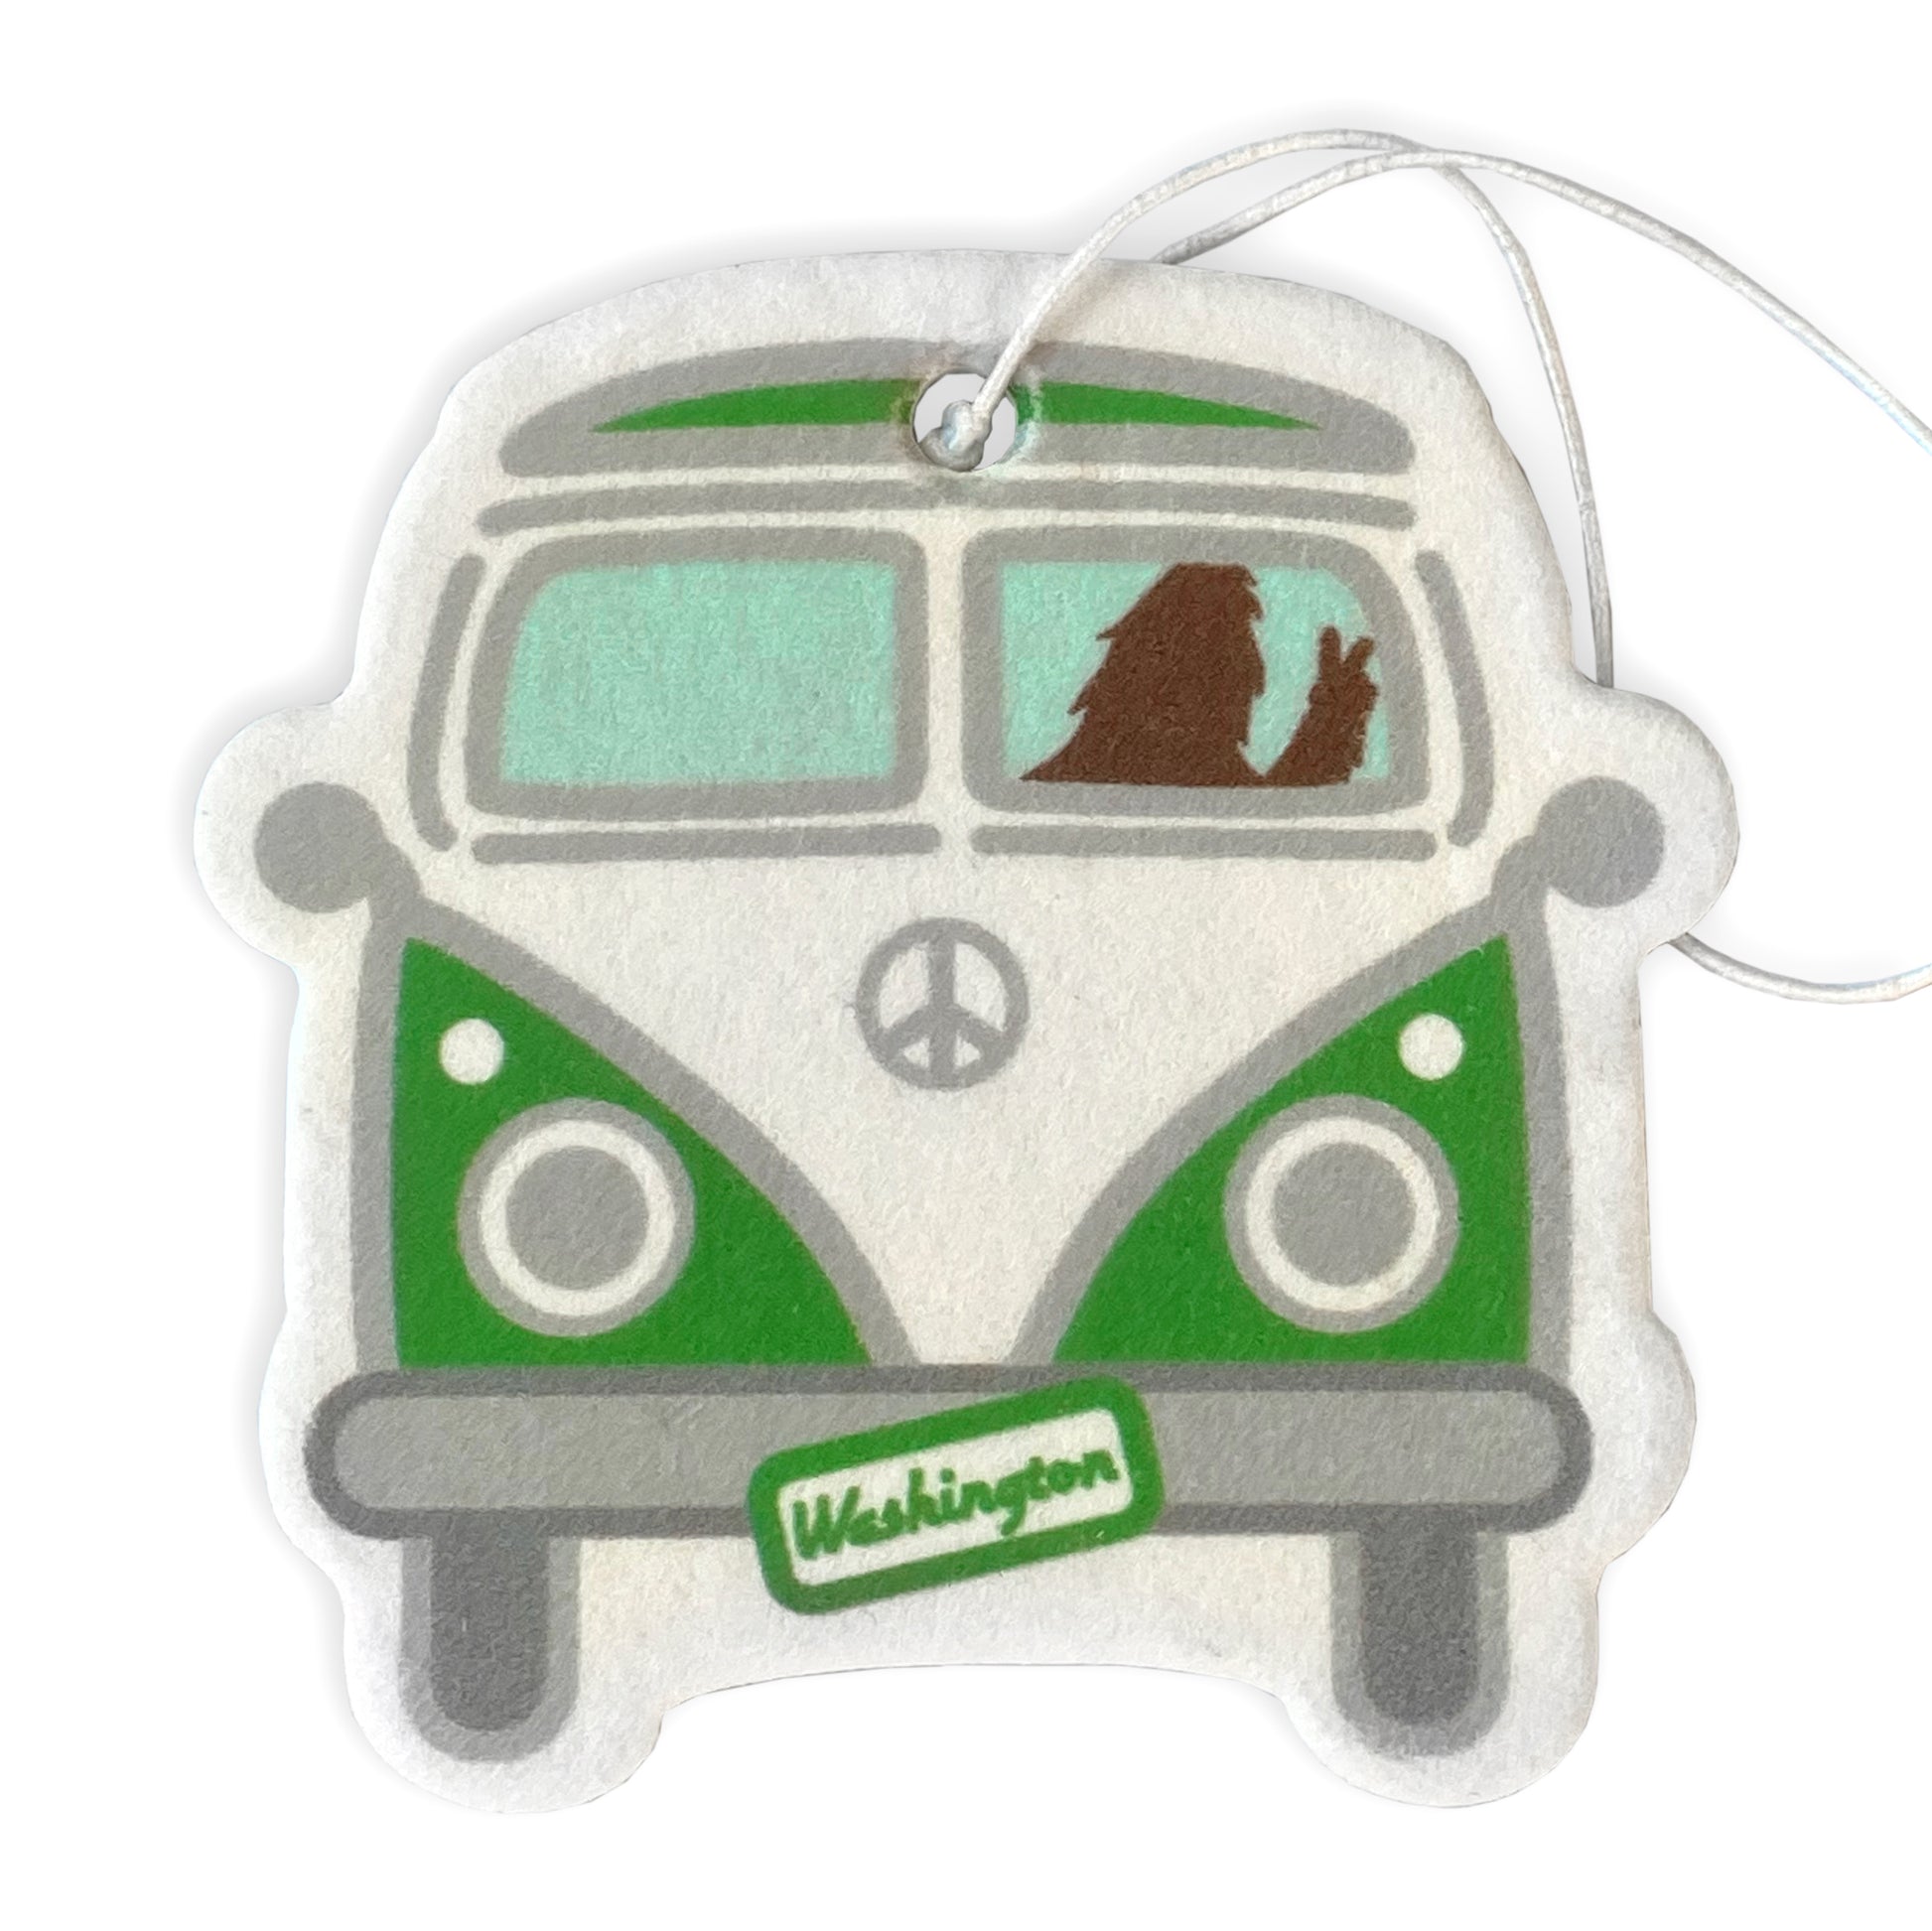 Washington Peace Van | Patchouli Scented Air Freshener